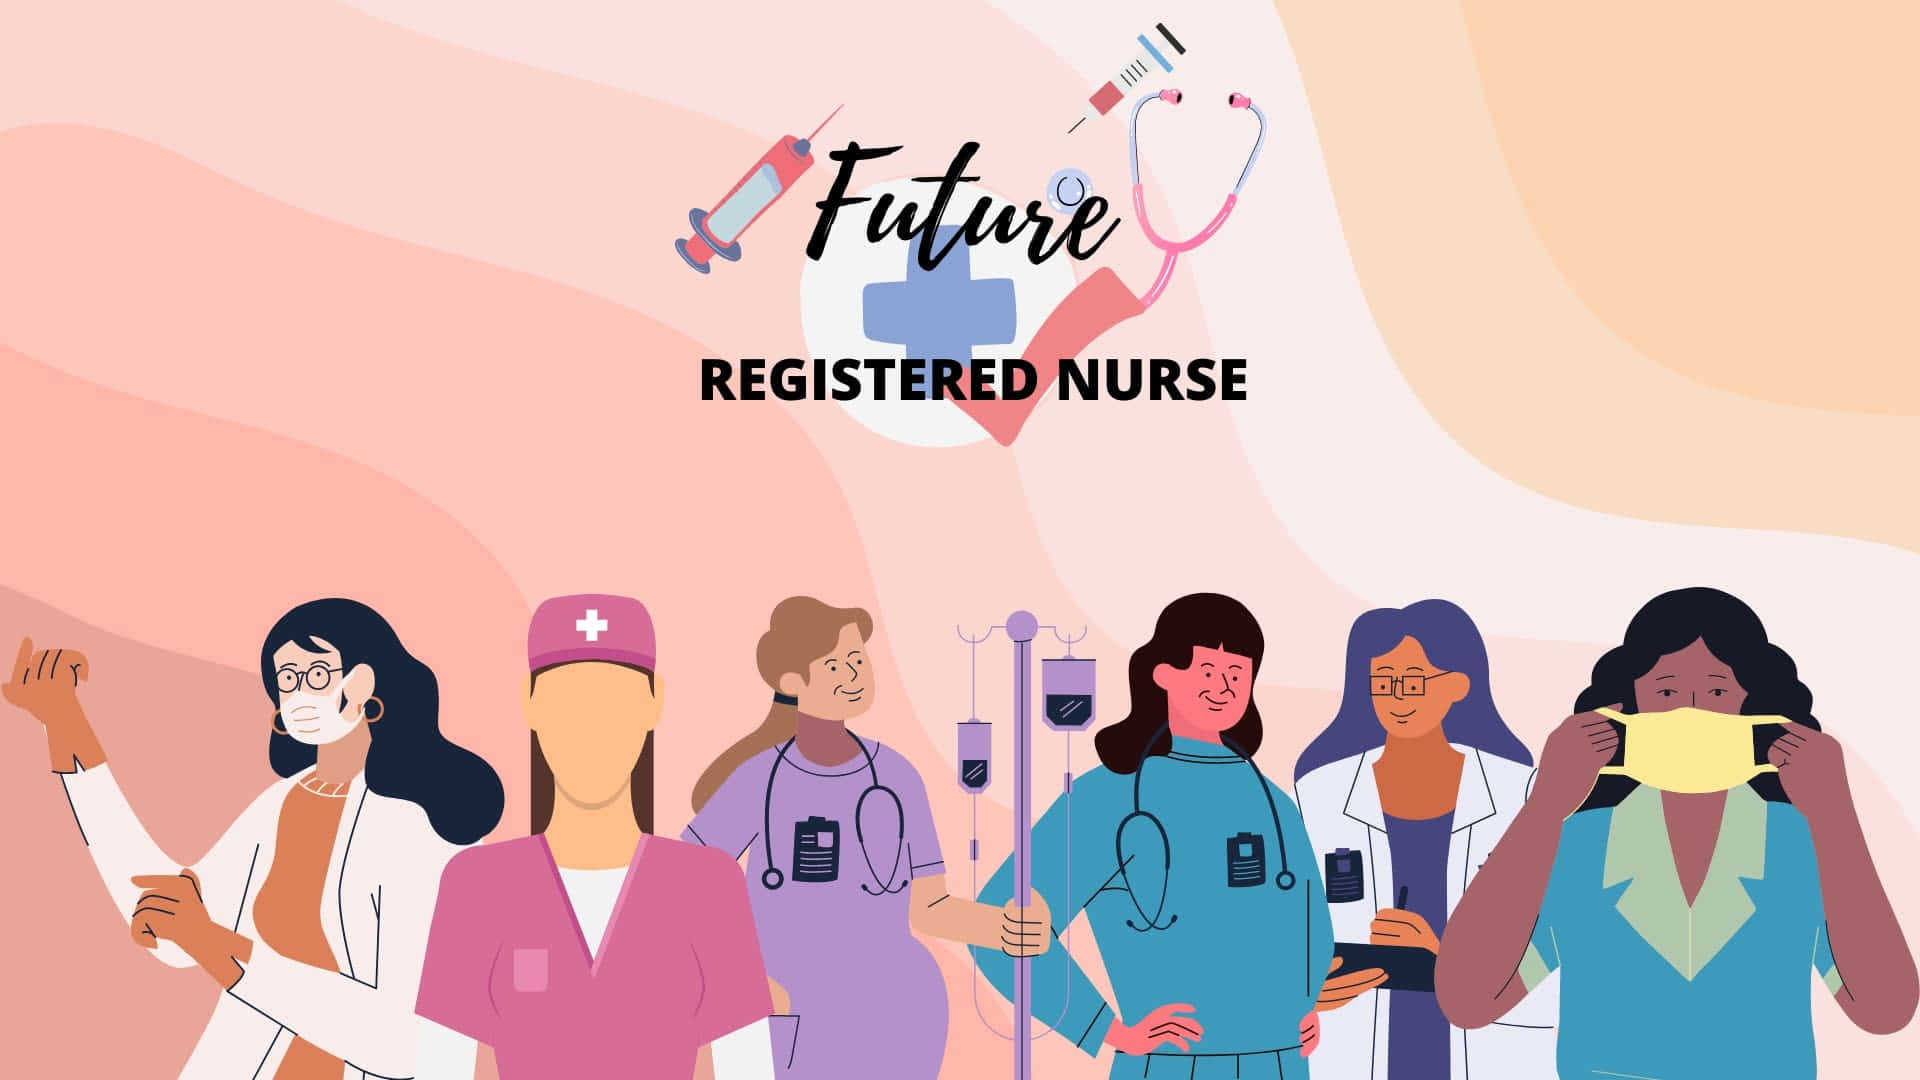 Future Registered Nurse Illustration Wallpaper